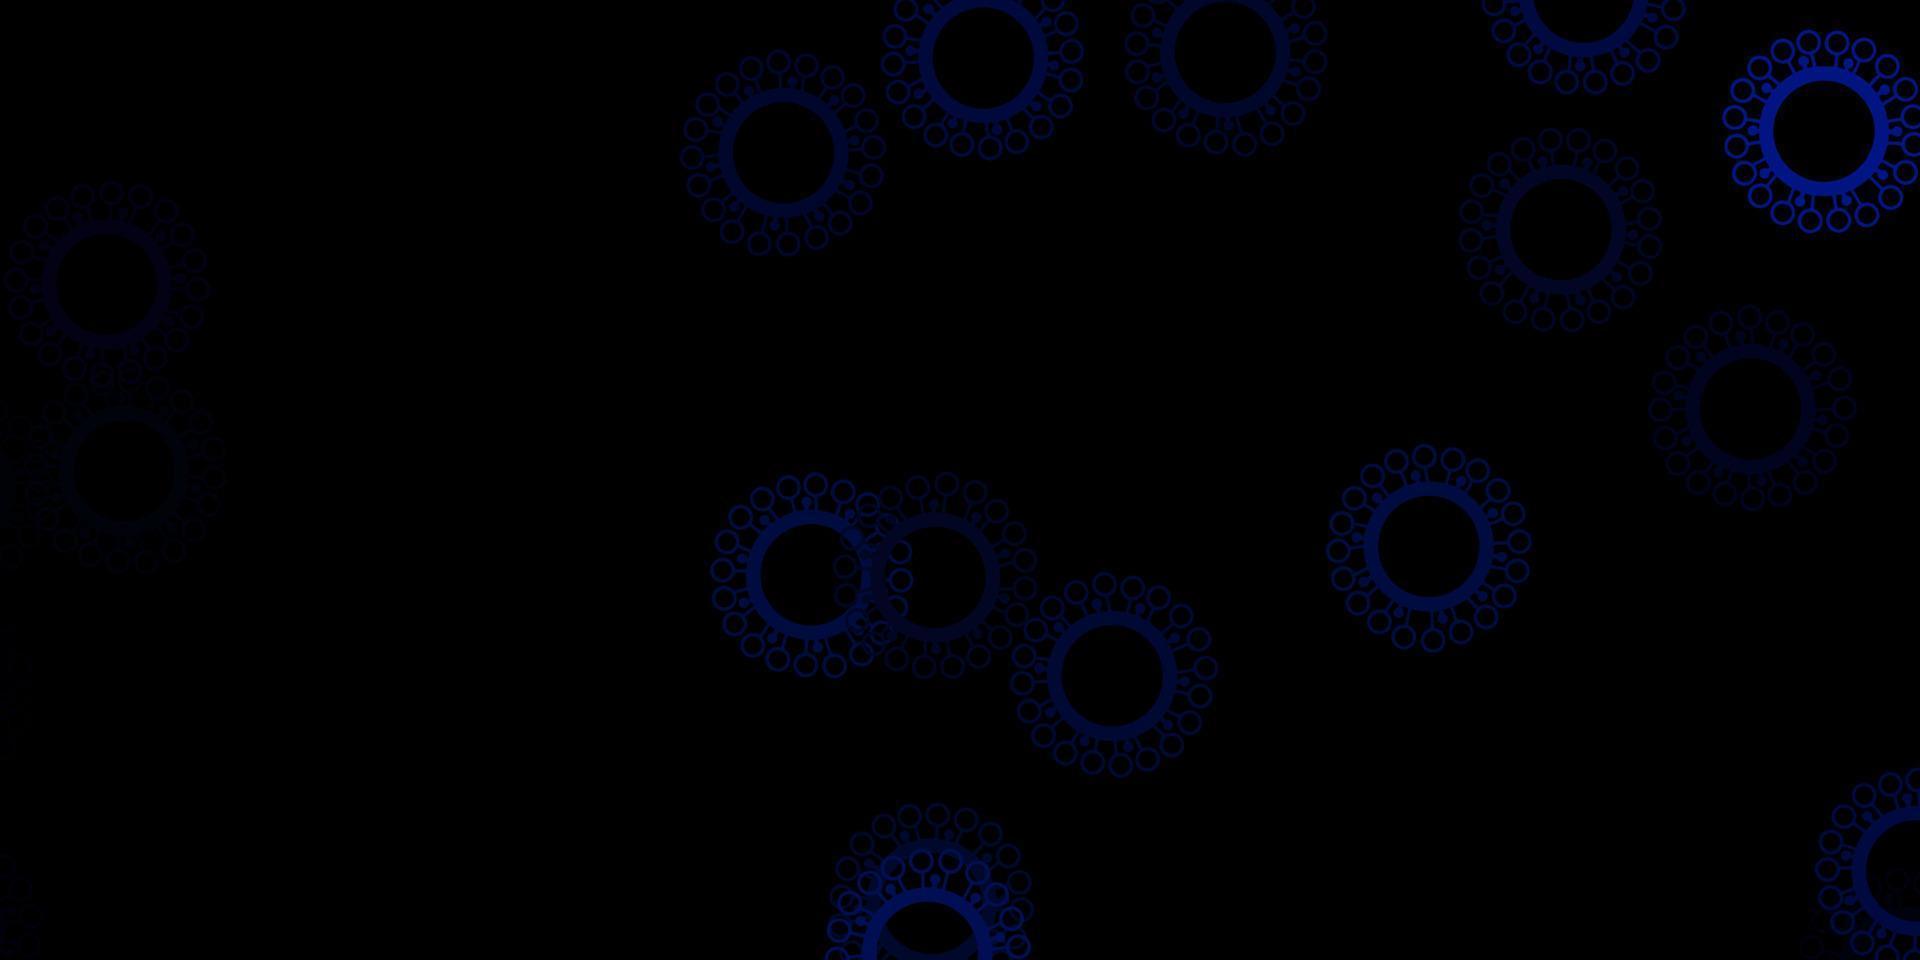 texture de vecteur bleu foncé avec des symboles de la maladie.